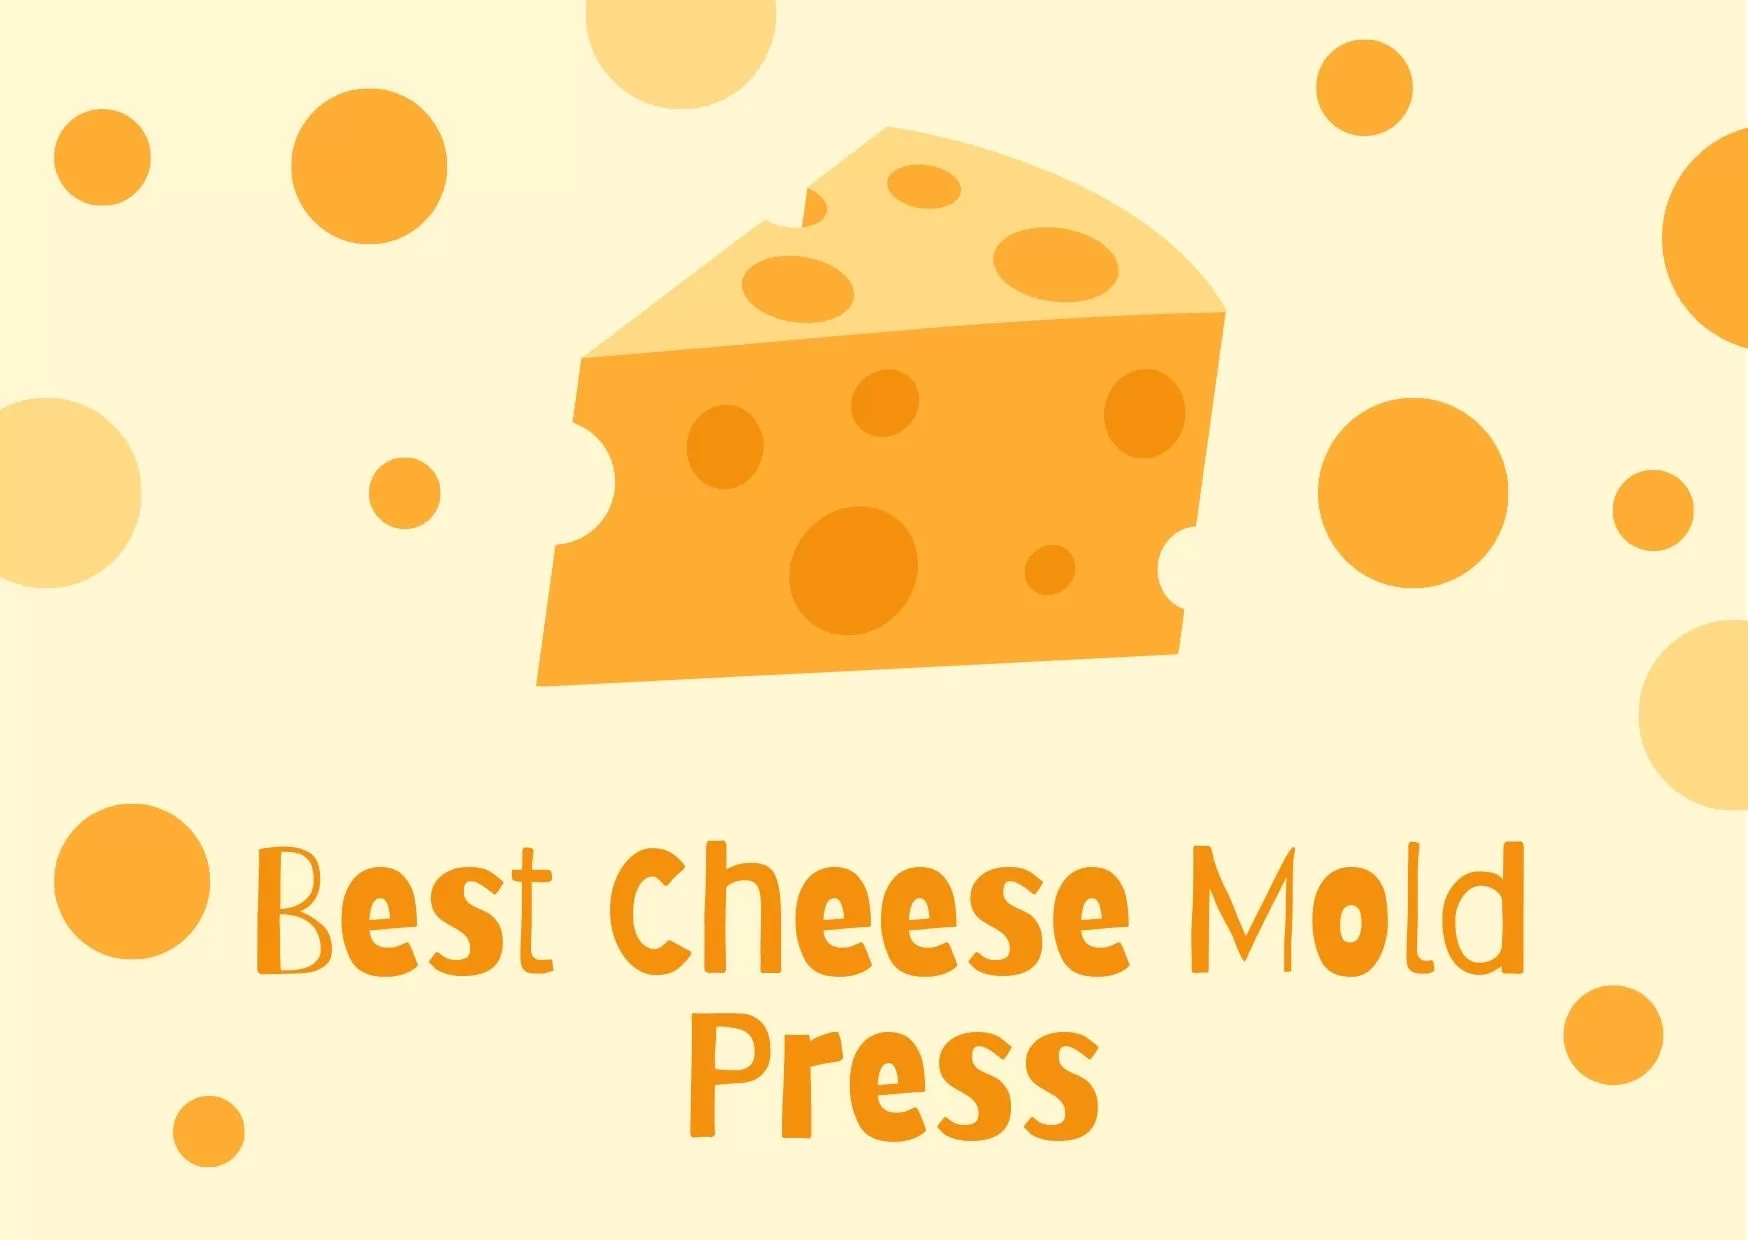 Cheese Mold Press